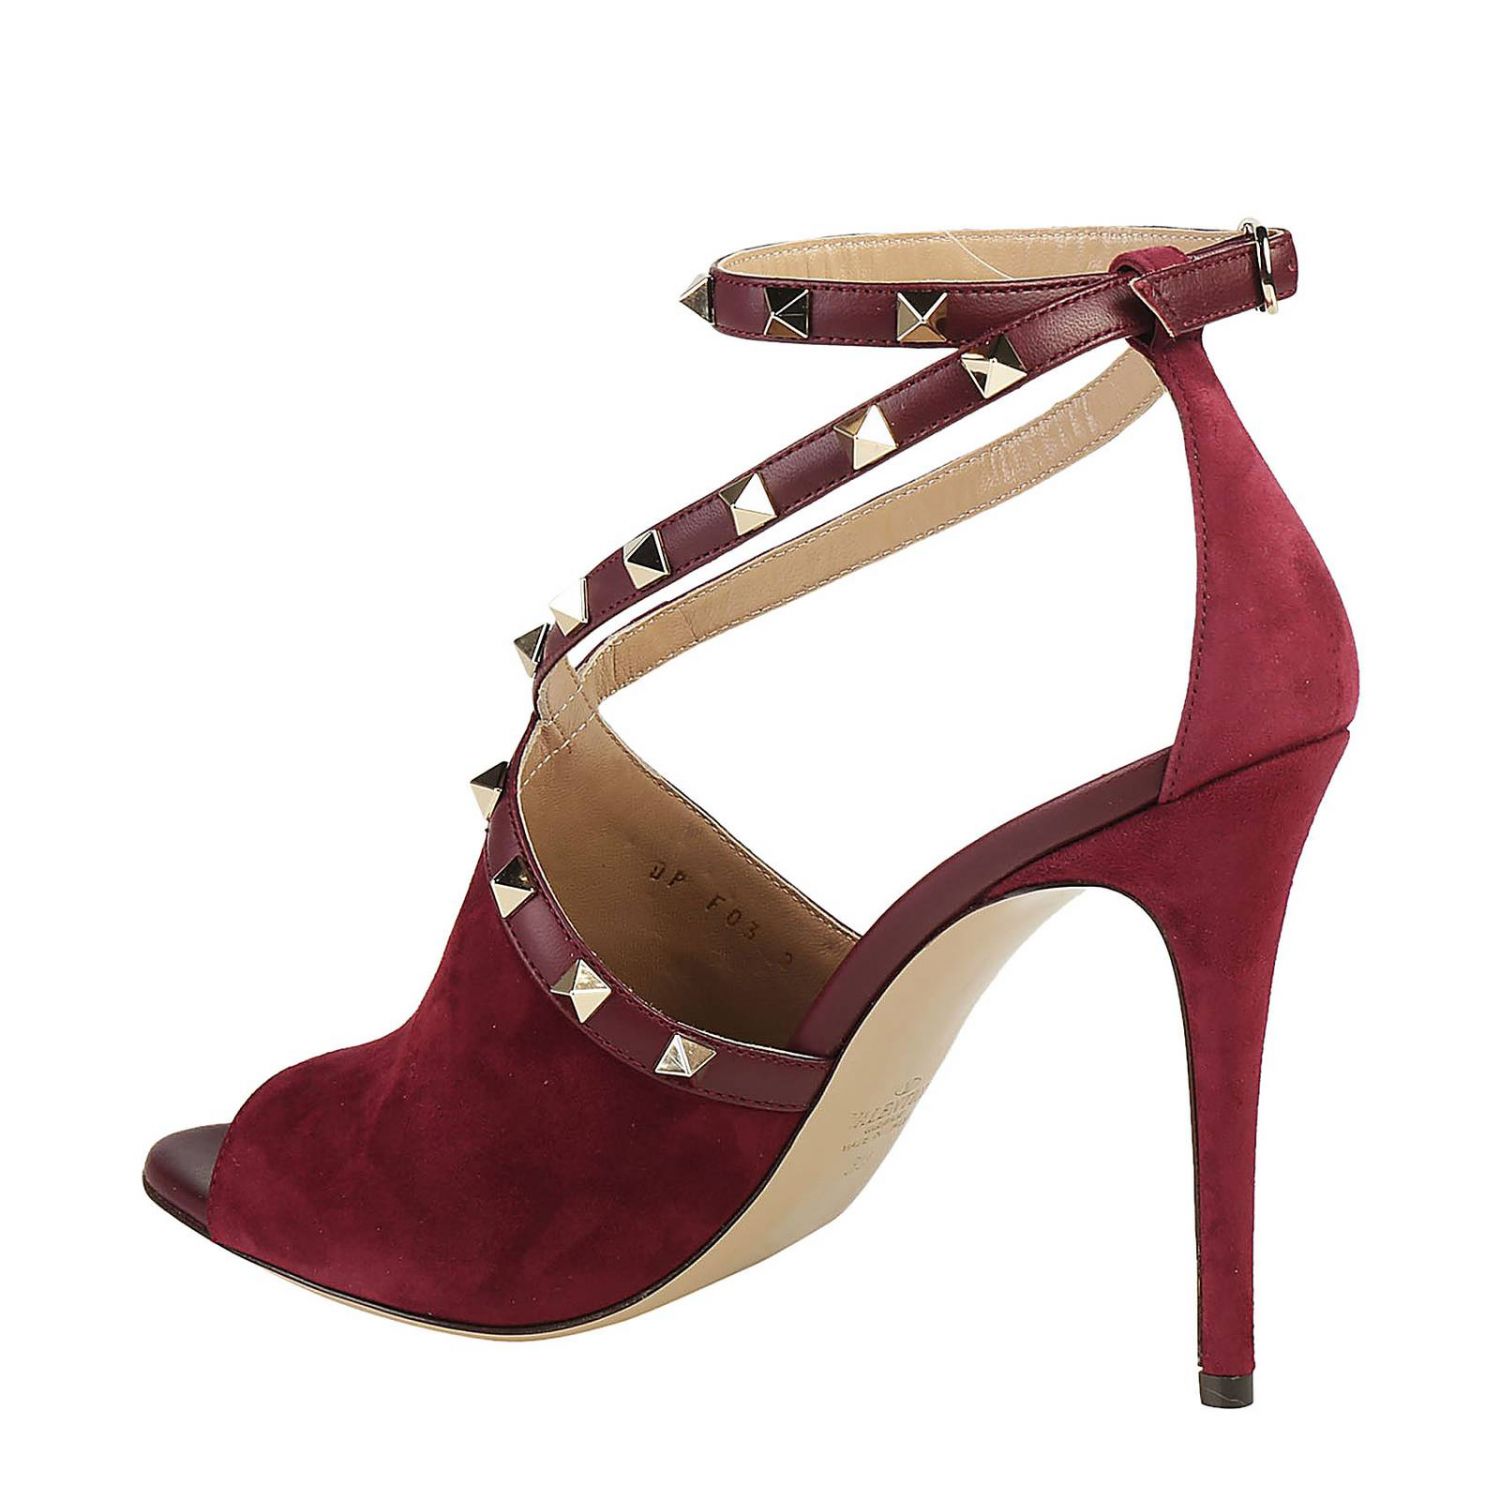 VALENTINO GARAVANI: Shoes women | Heeled Sandals Valentino Garavani ...